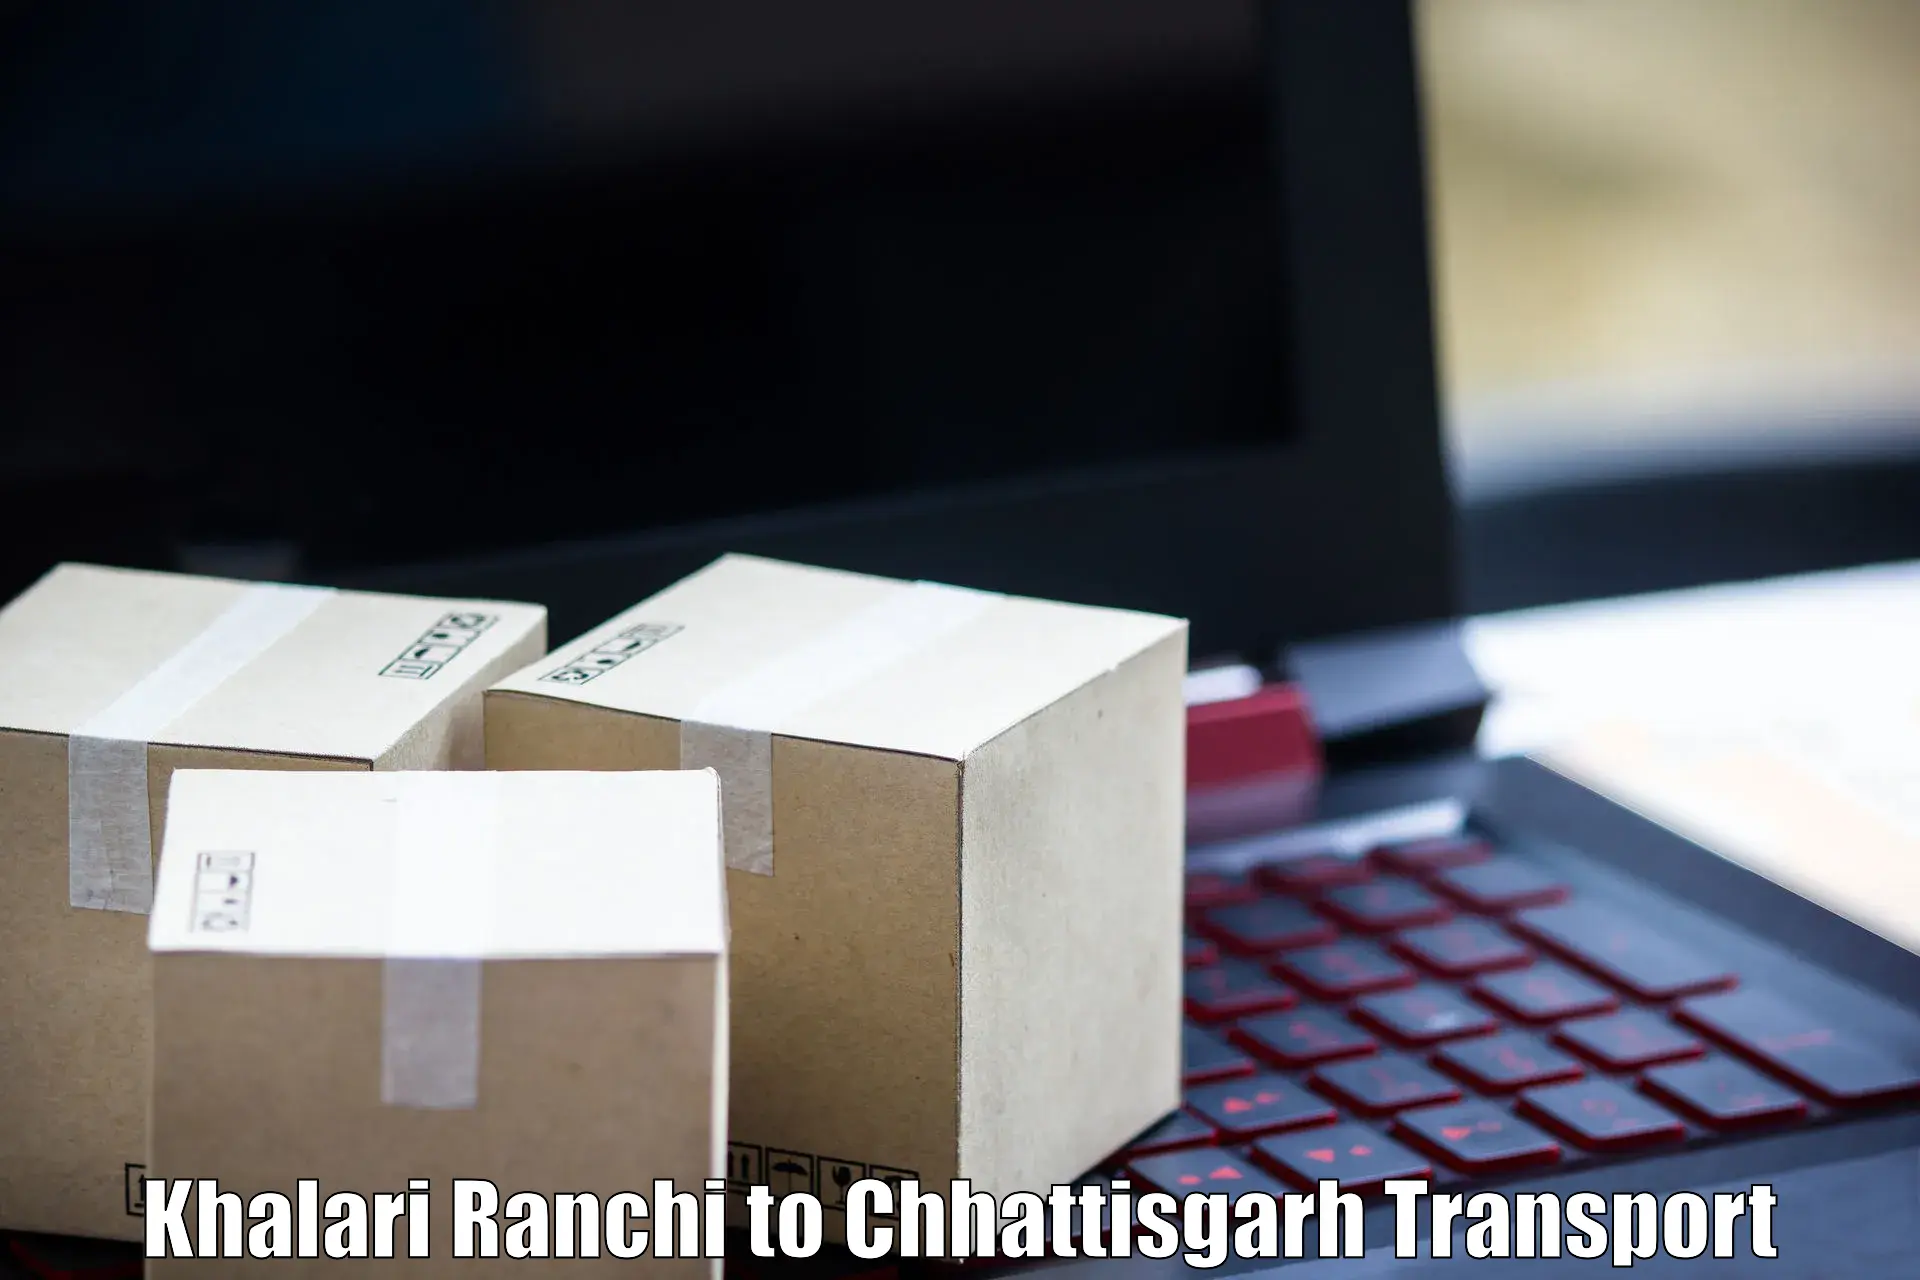 Furniture transport service Khalari Ranchi to Raipur